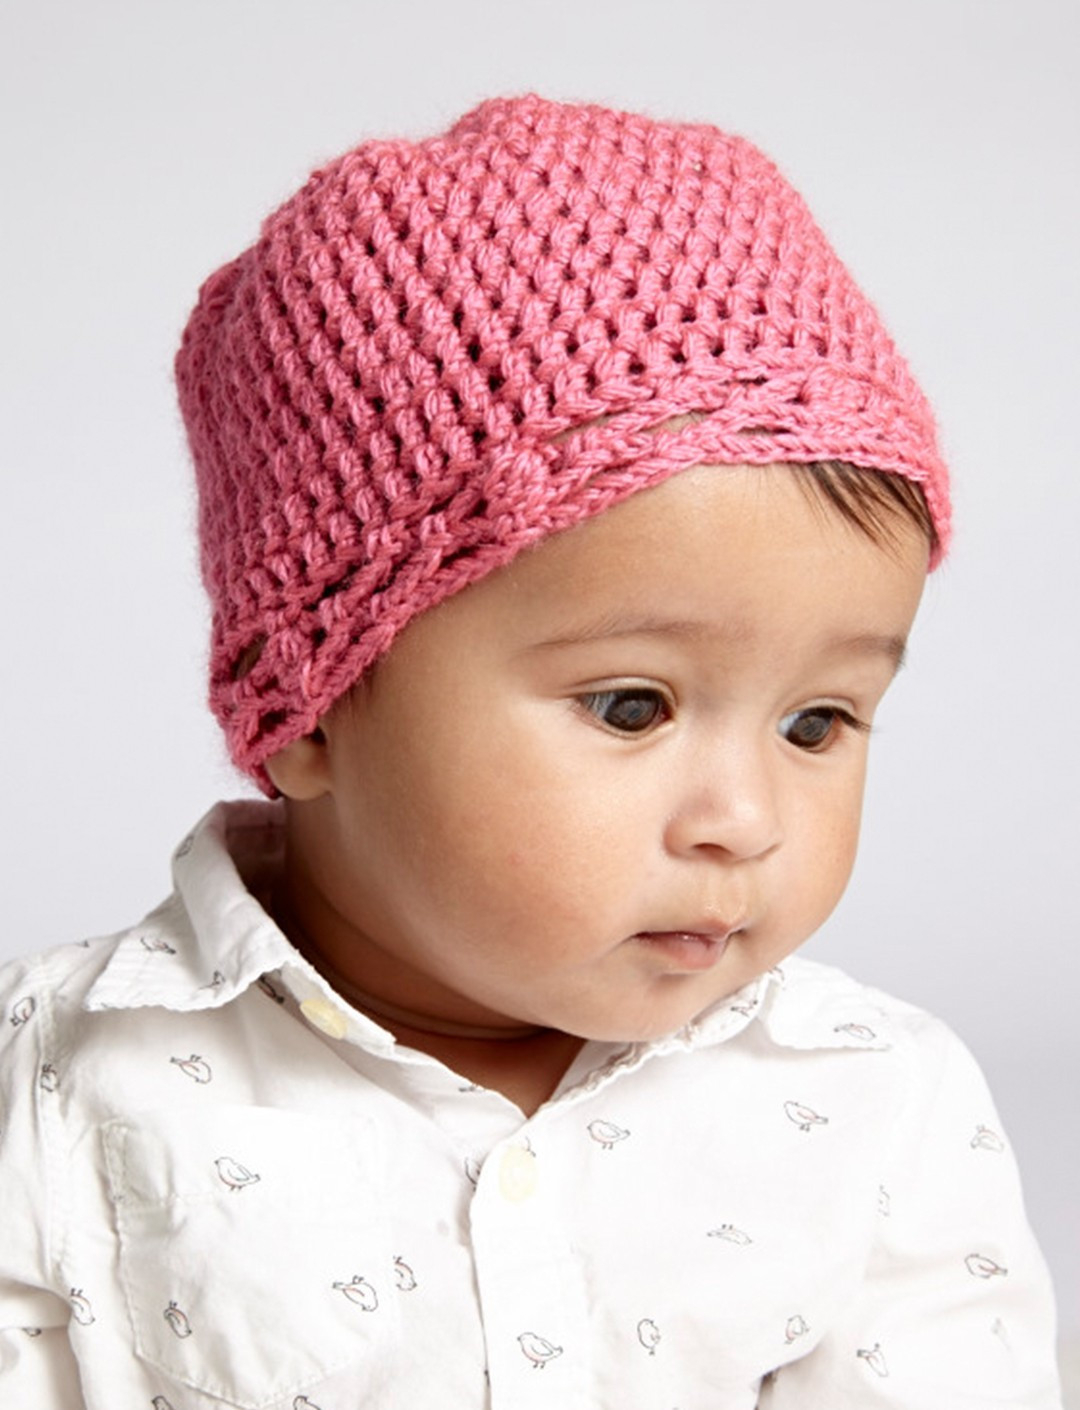 Baby Boy Crochet Hat Patterns for Beginners Lovely 49 Pics Ba Hat